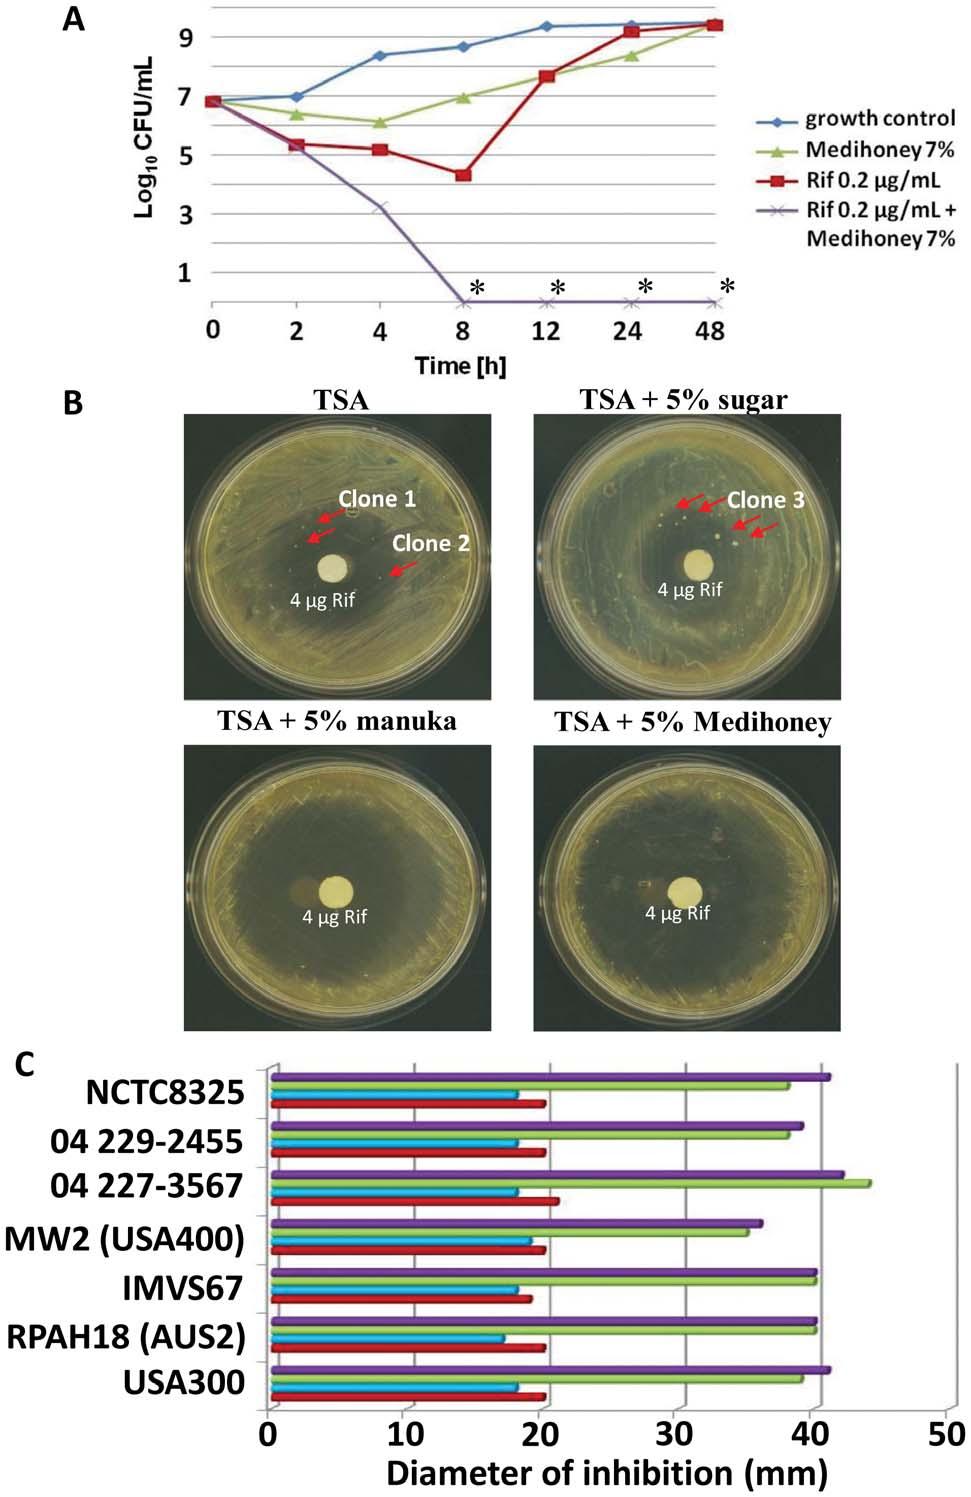 Figure 1. Enhanced antibacterial activity of rifampicin-honey combination treatment against S. aureus. (A) Time-kill curves for S. aureus NCTC8325 in CaMHB. Bacteria were incubated in 7% Medihoney, 0.